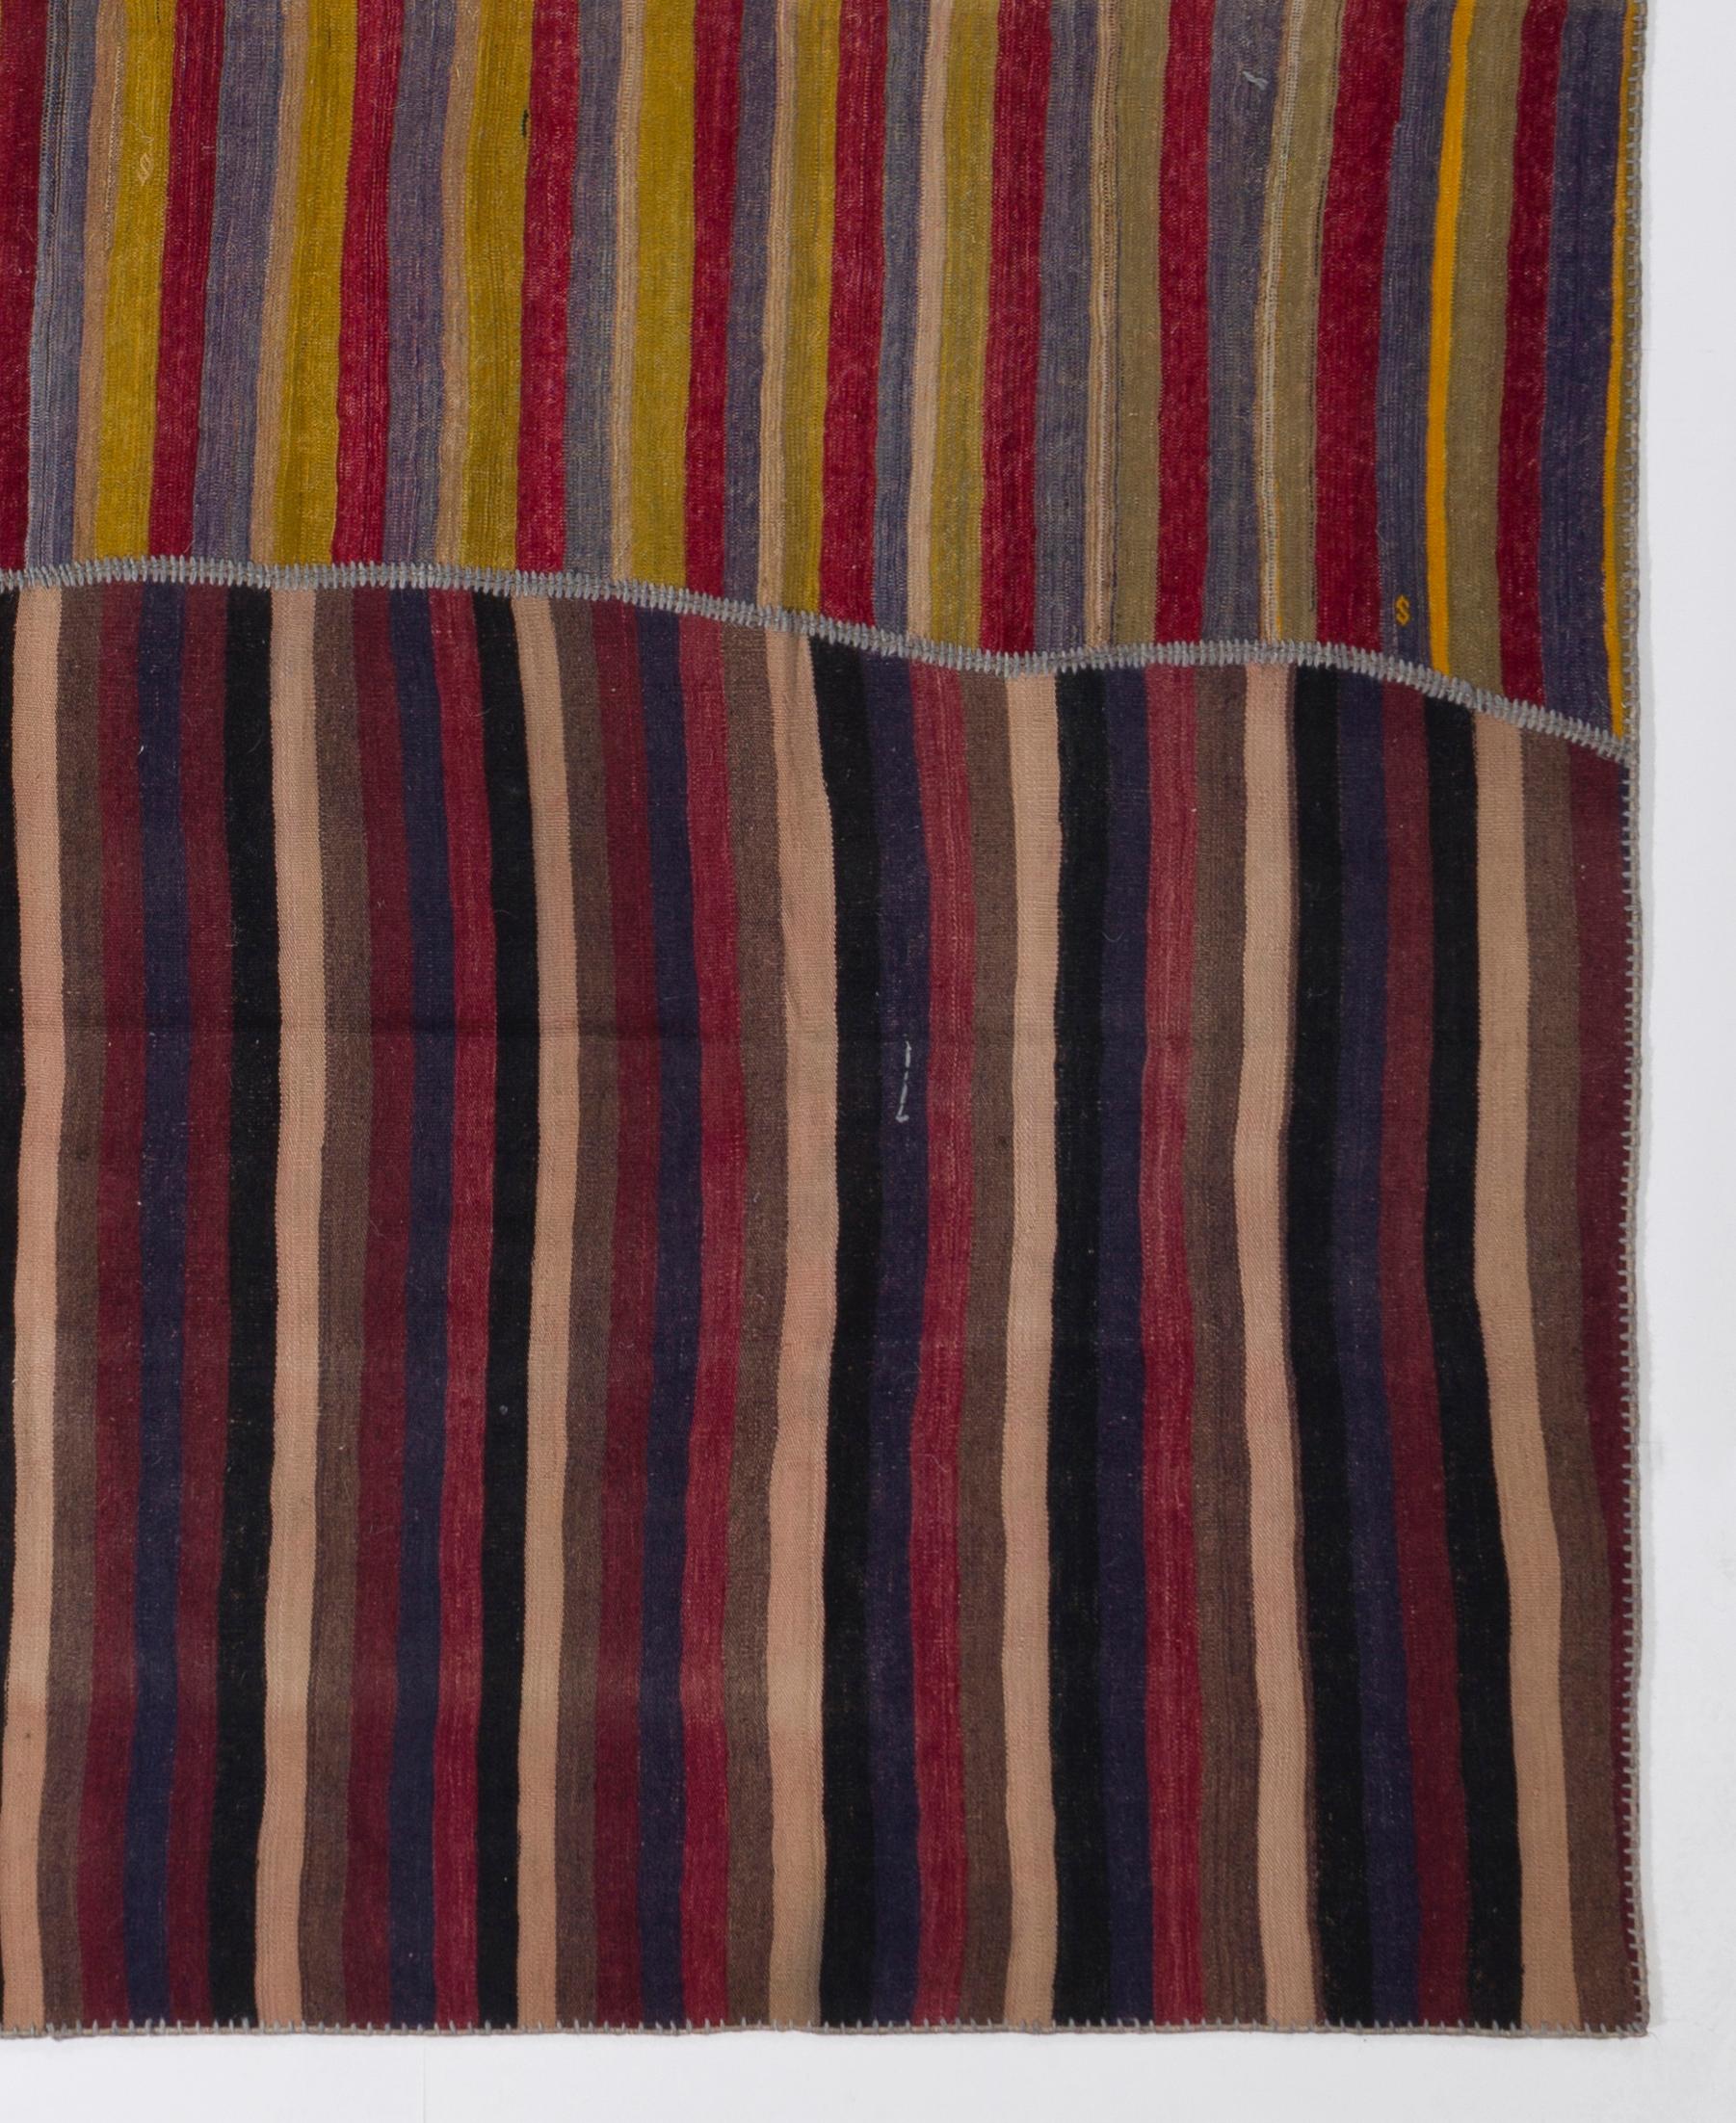 Cotton 10x12 Ft Vintage Turkish Banded Kilim Rug, Handwoven in 3 Panels